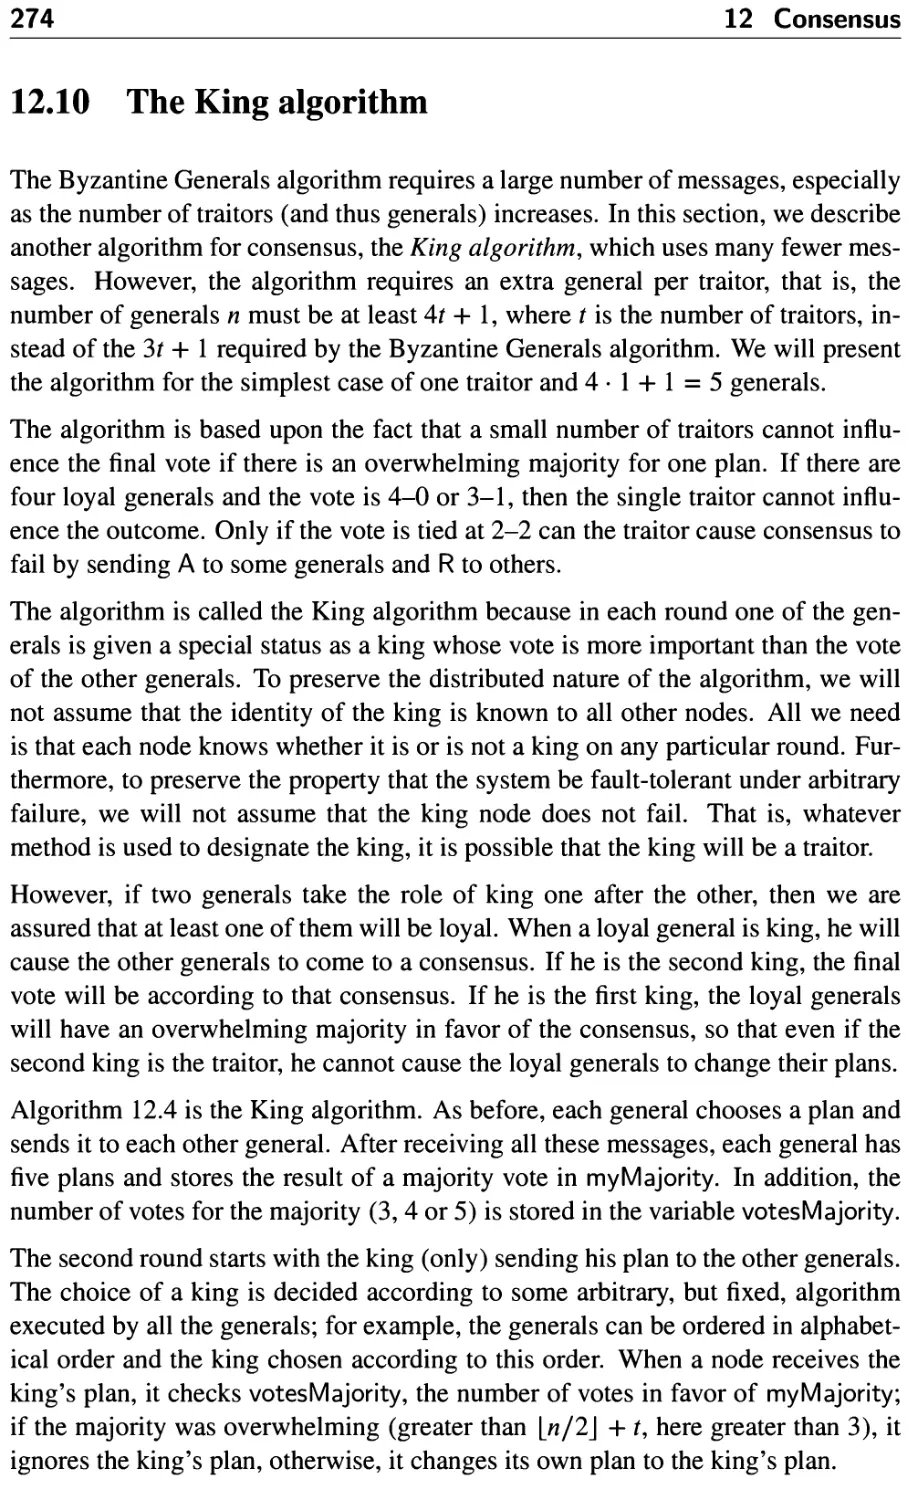 12.10 The King algorithm